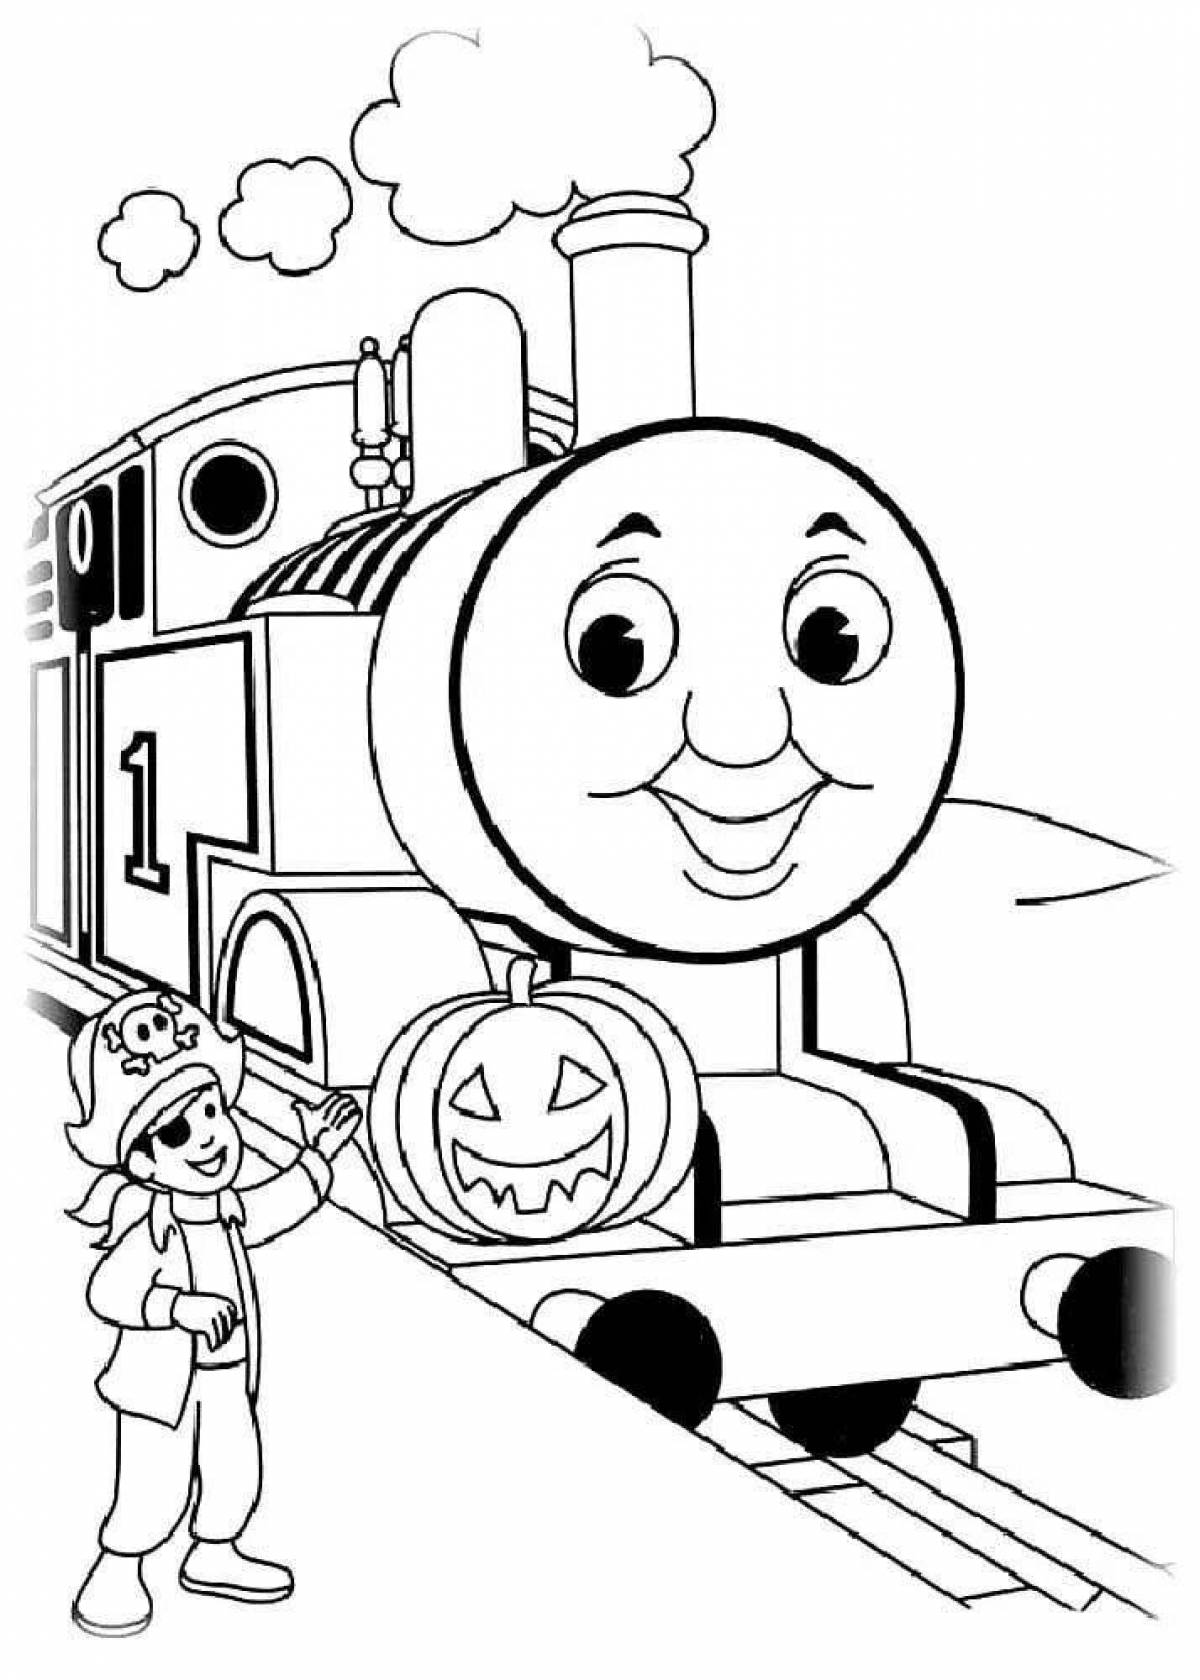 Charming thomas locomotive coloring book